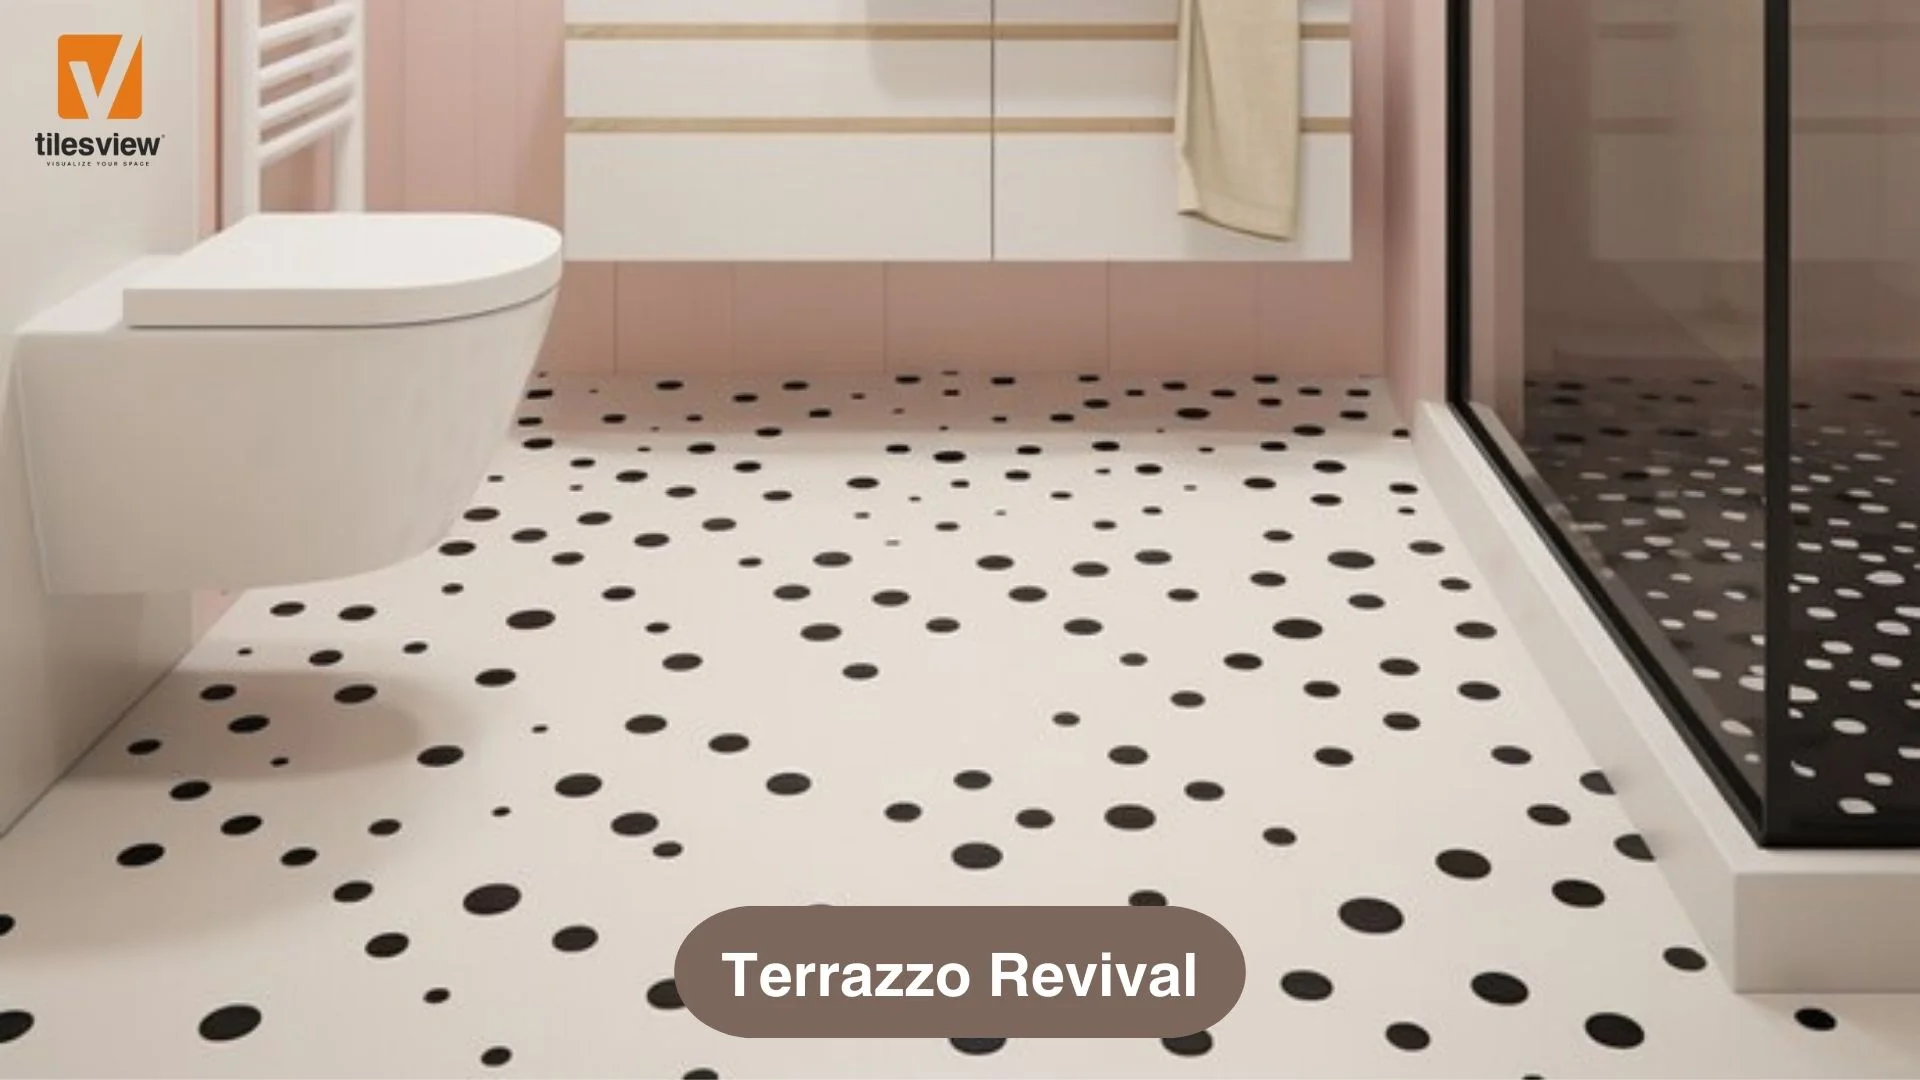 Terrazzo Revival